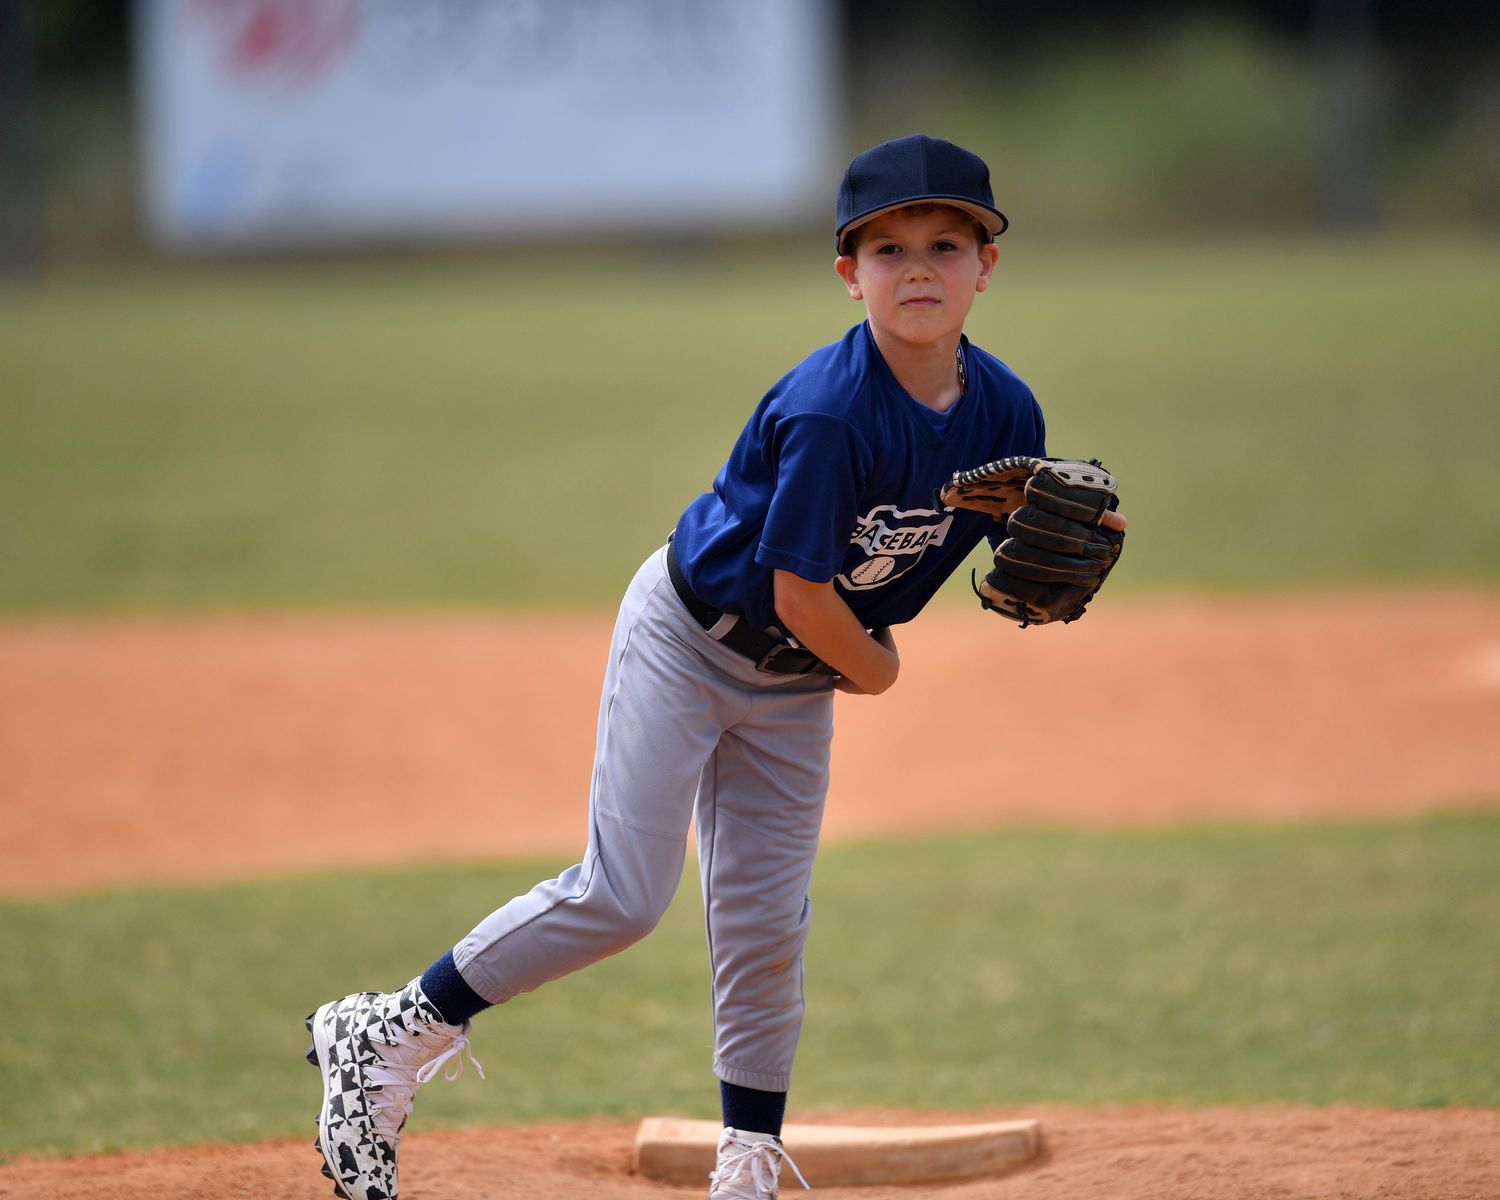 Young Boy Playing Baseball on Field